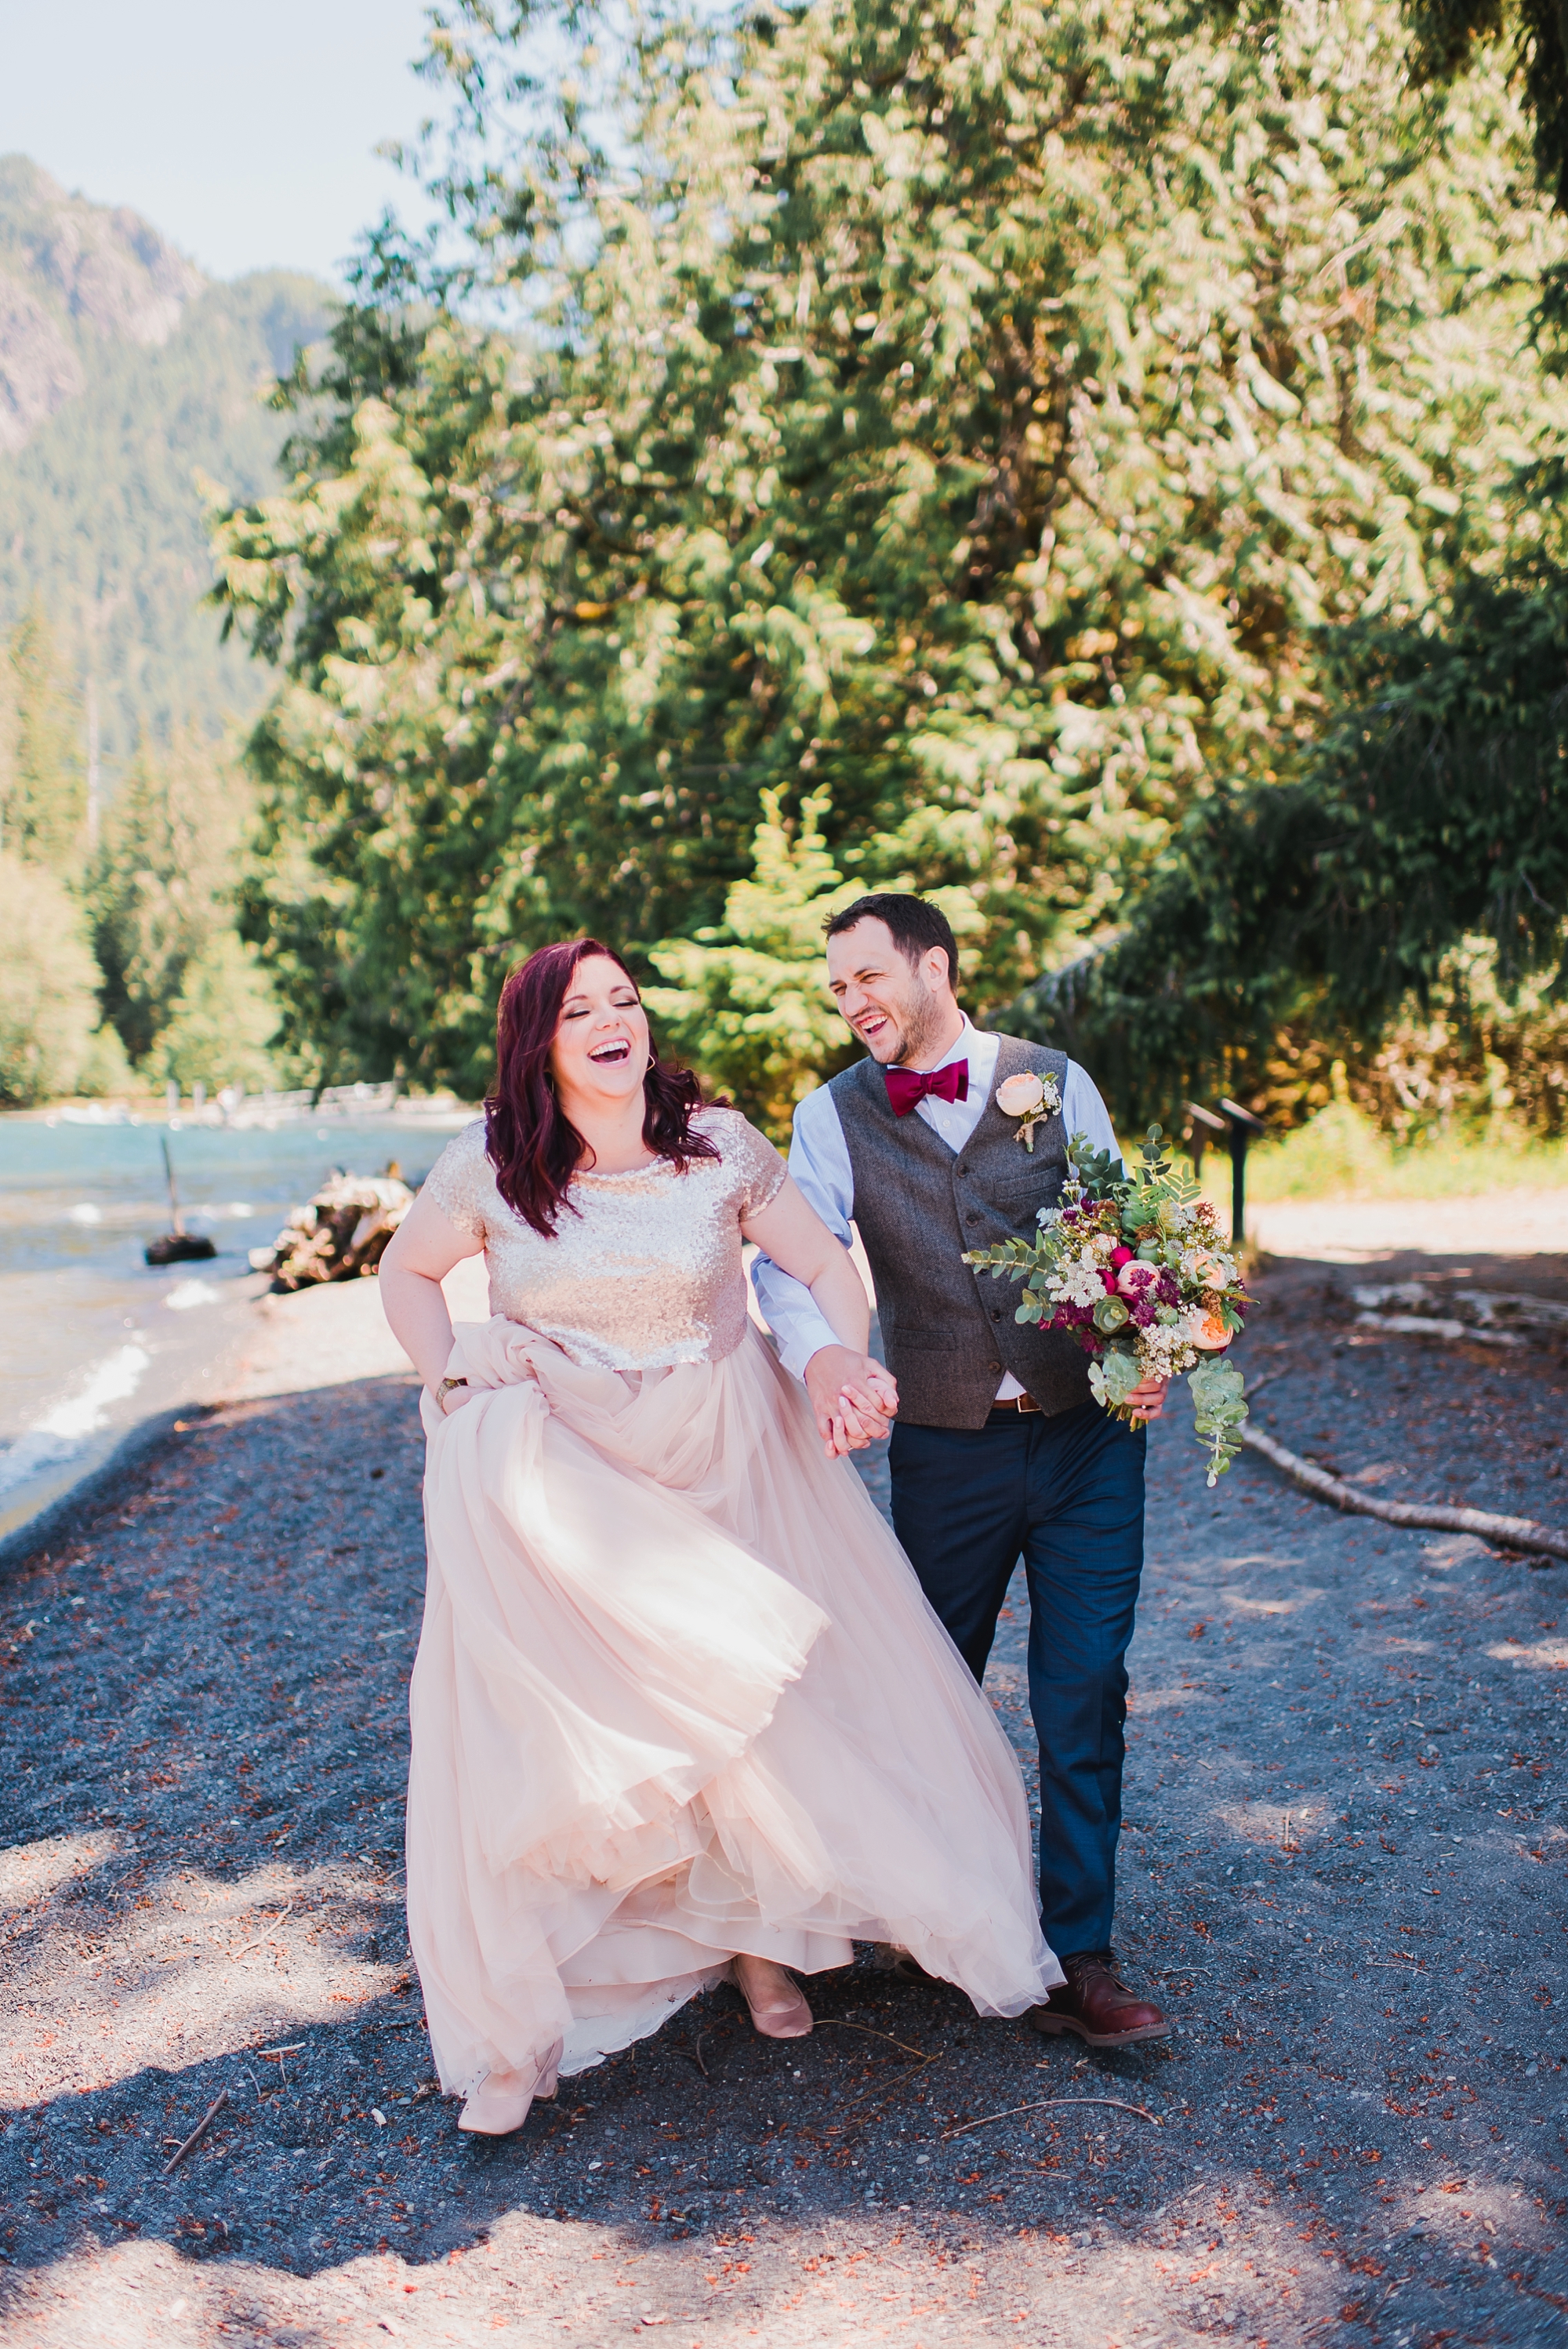 Lake Crescent bride and groom lauging